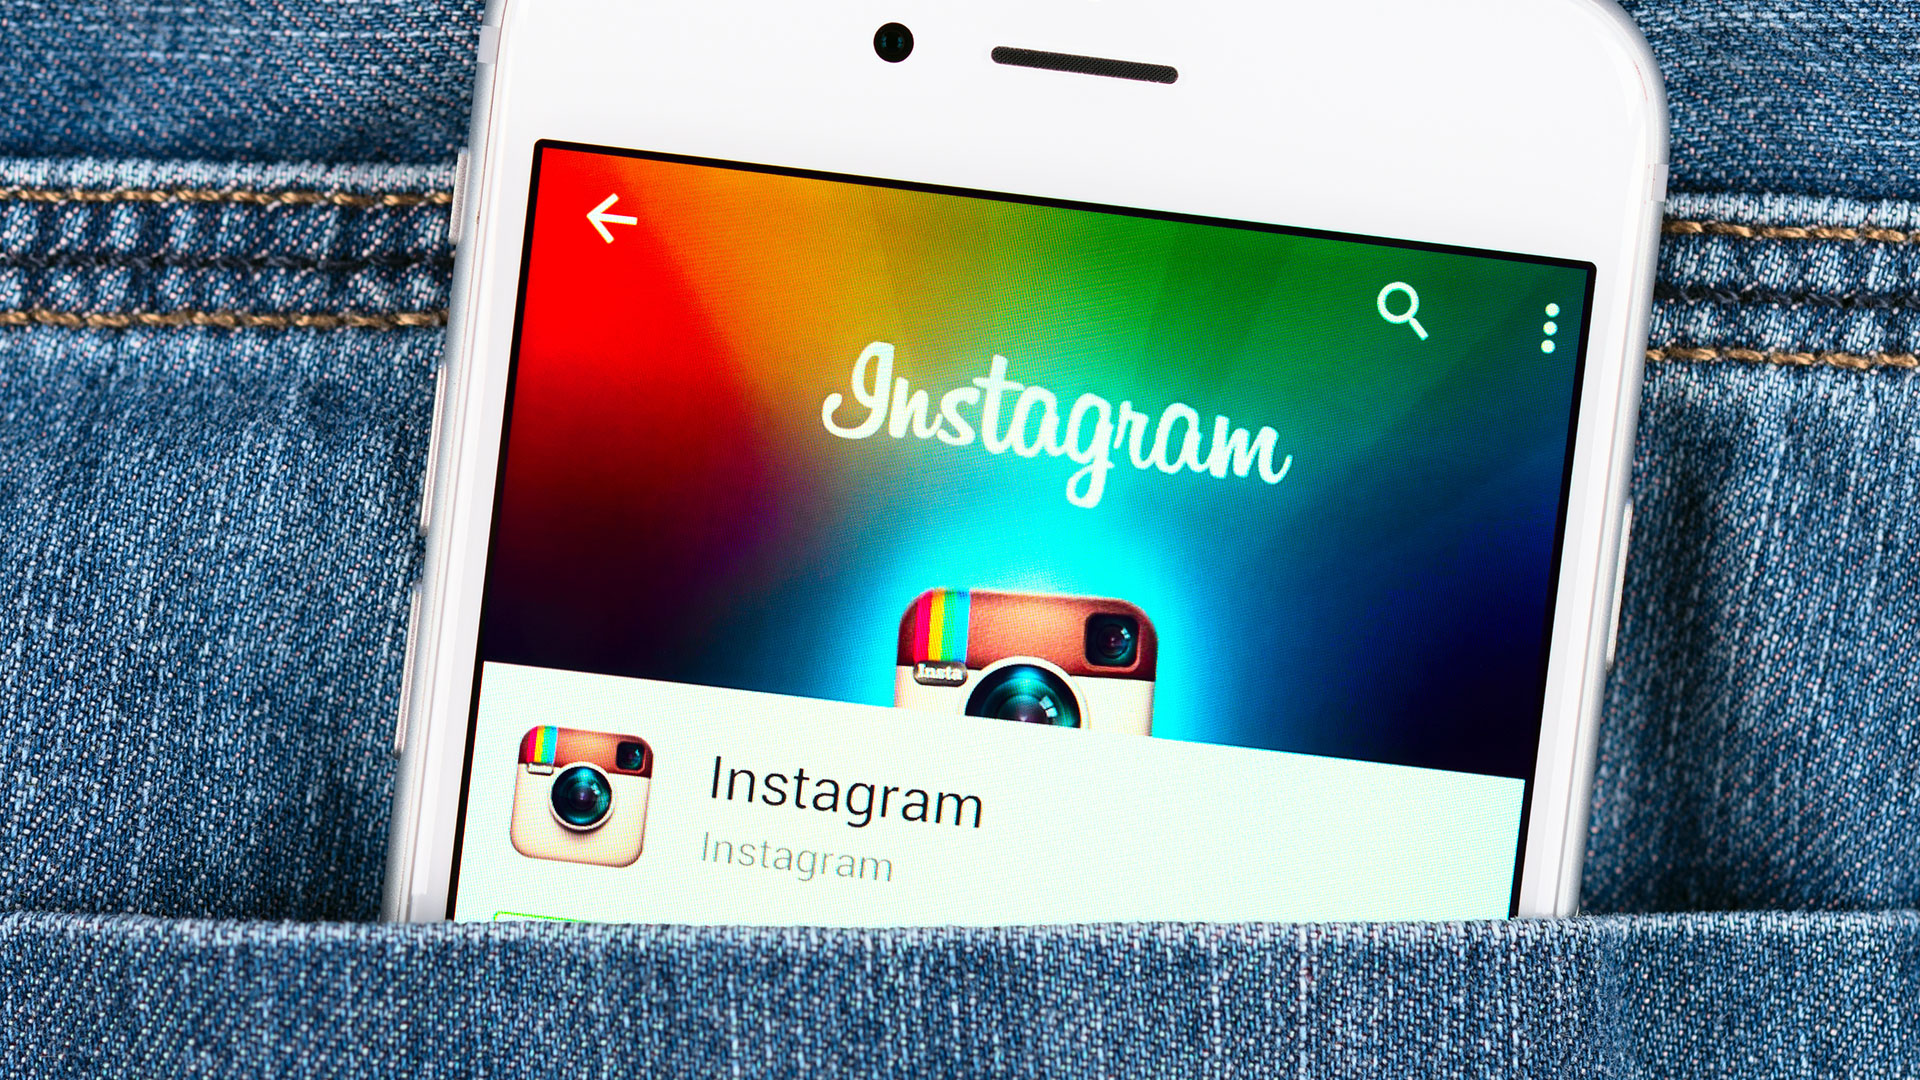 Число рекламодателей в Instagram выросло в пять раз — до 1 млн, Miracle, 22 мар 2017, 20:31, instagram-mobile-pocket-ss-1920.jpg